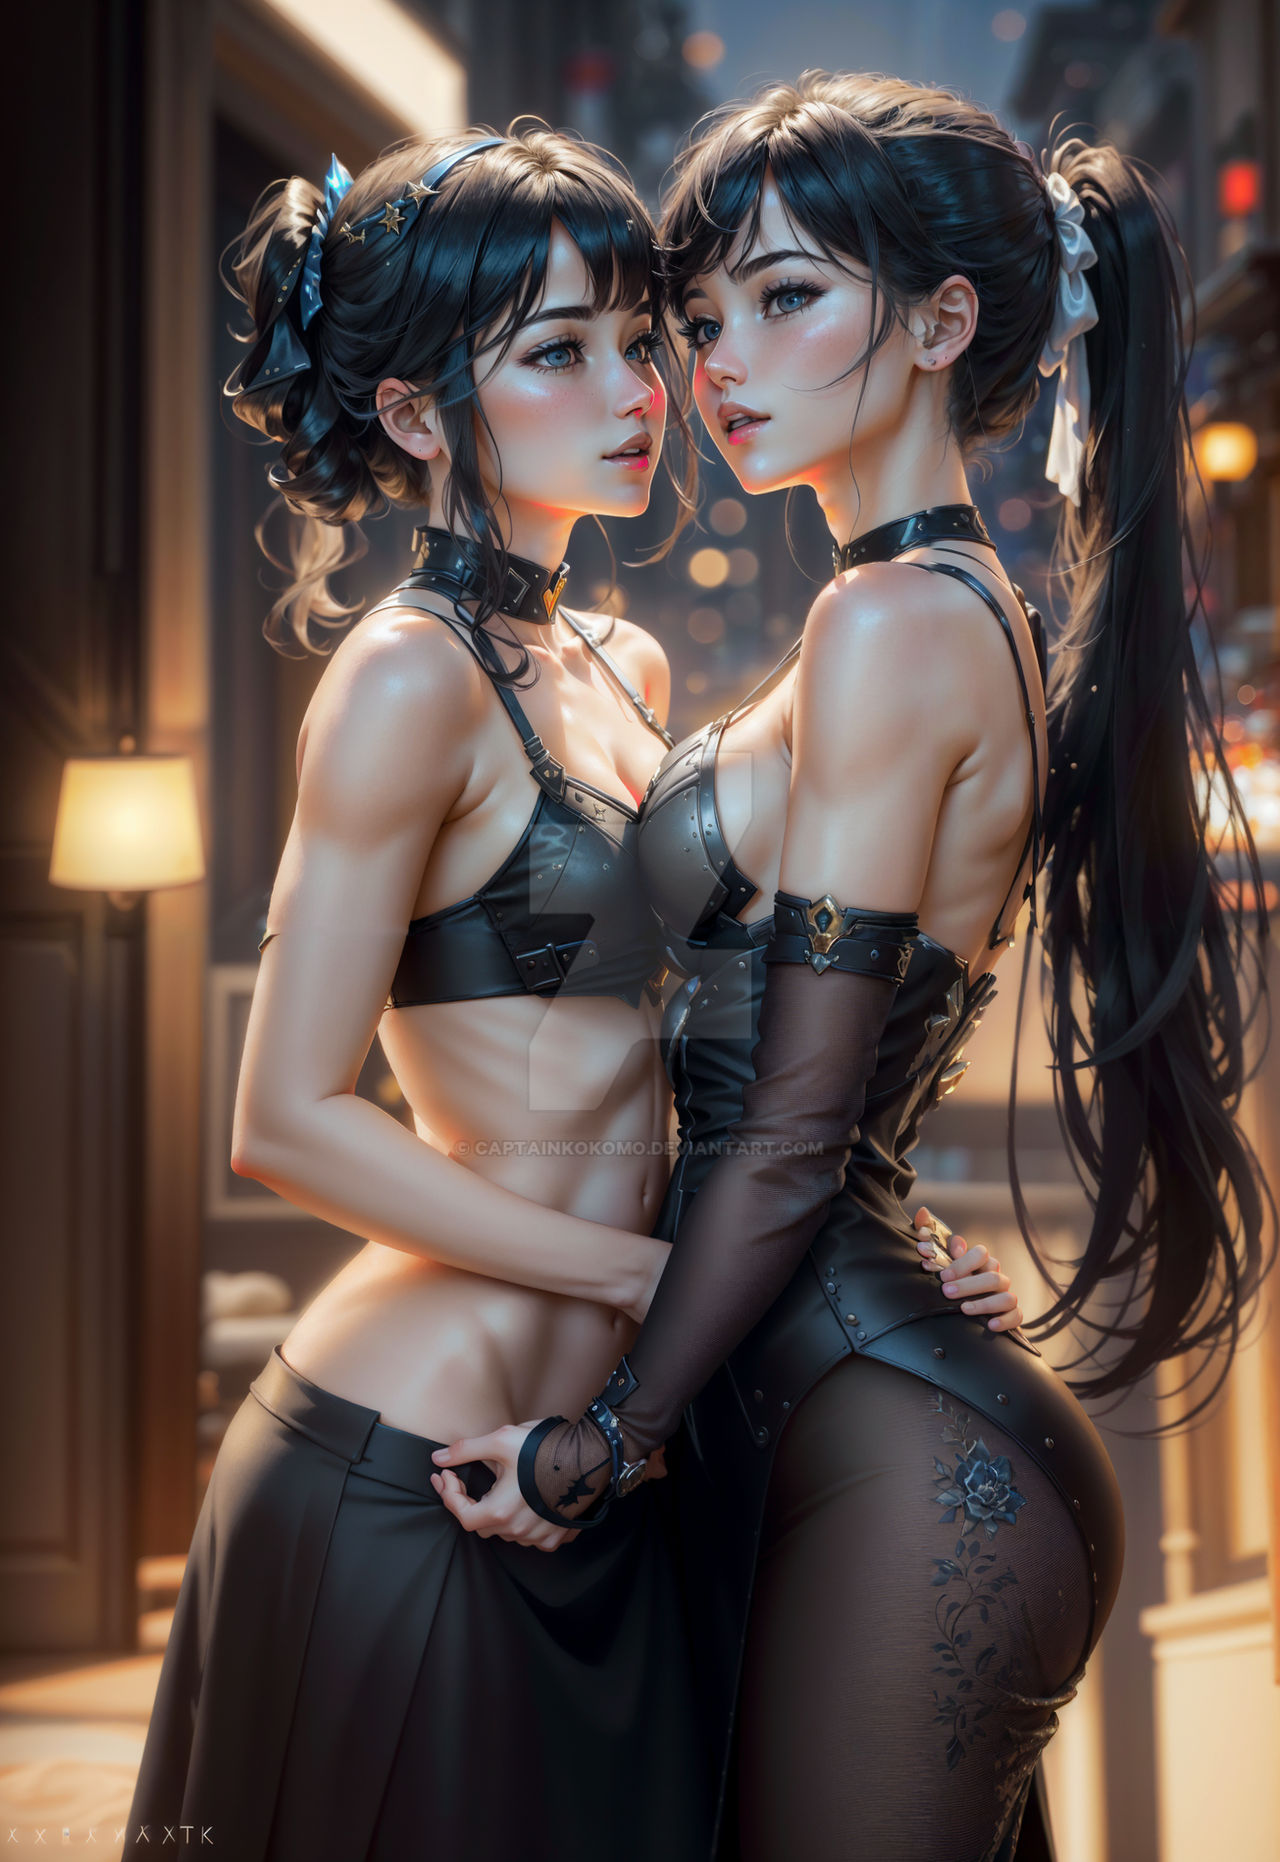 The Twins by CaptainKokomo on DeviantArt